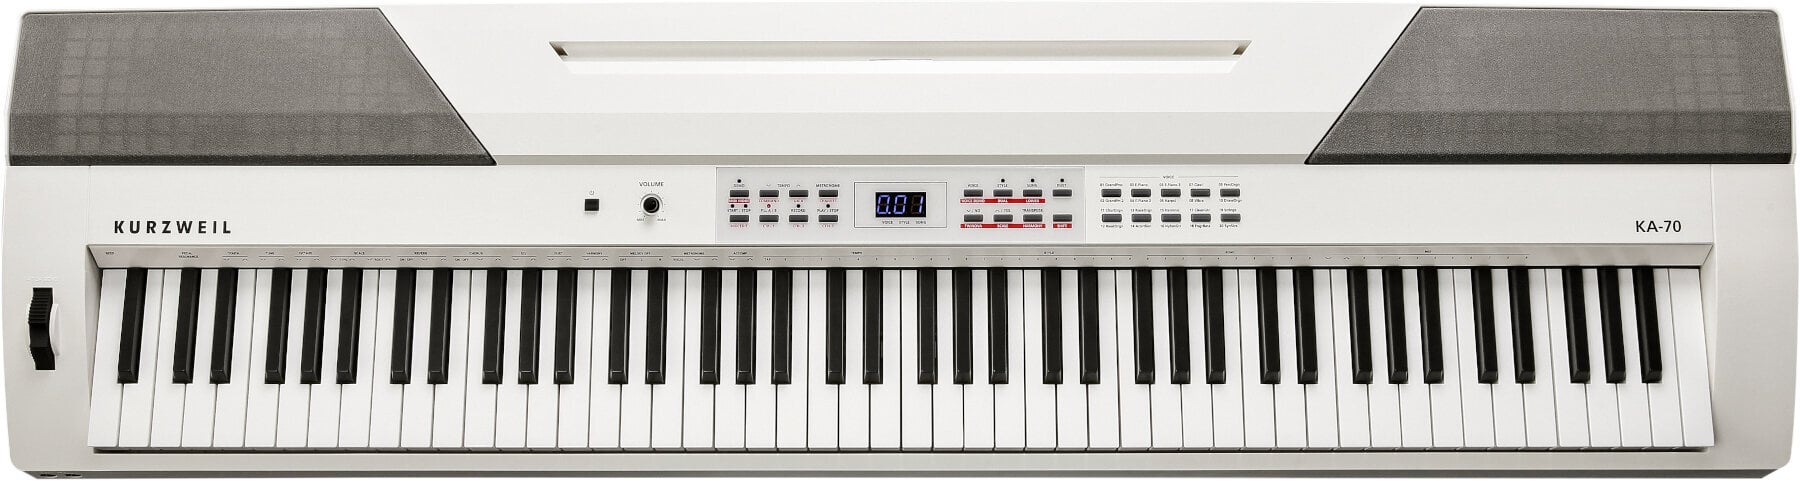 Piano de escenario digital Kurzweil KA70 WH Piano de escenario digital